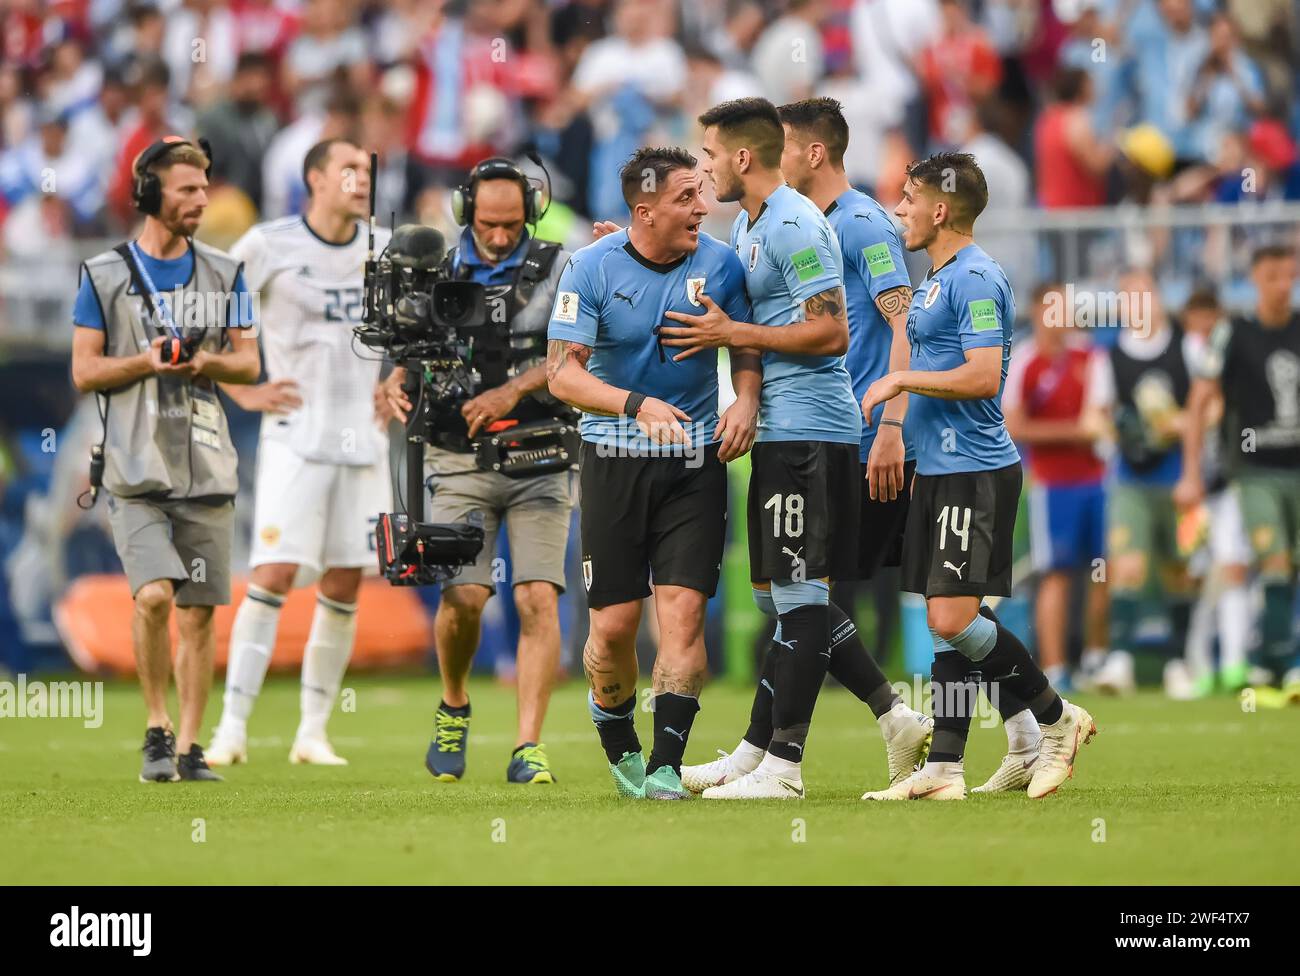 Samara, Russia – June 25, 2018. Players of Uruguay national football team celebrating victory in FIFA World Cup 2018 match Uruguay vs Russia (3-0). Stock Photo